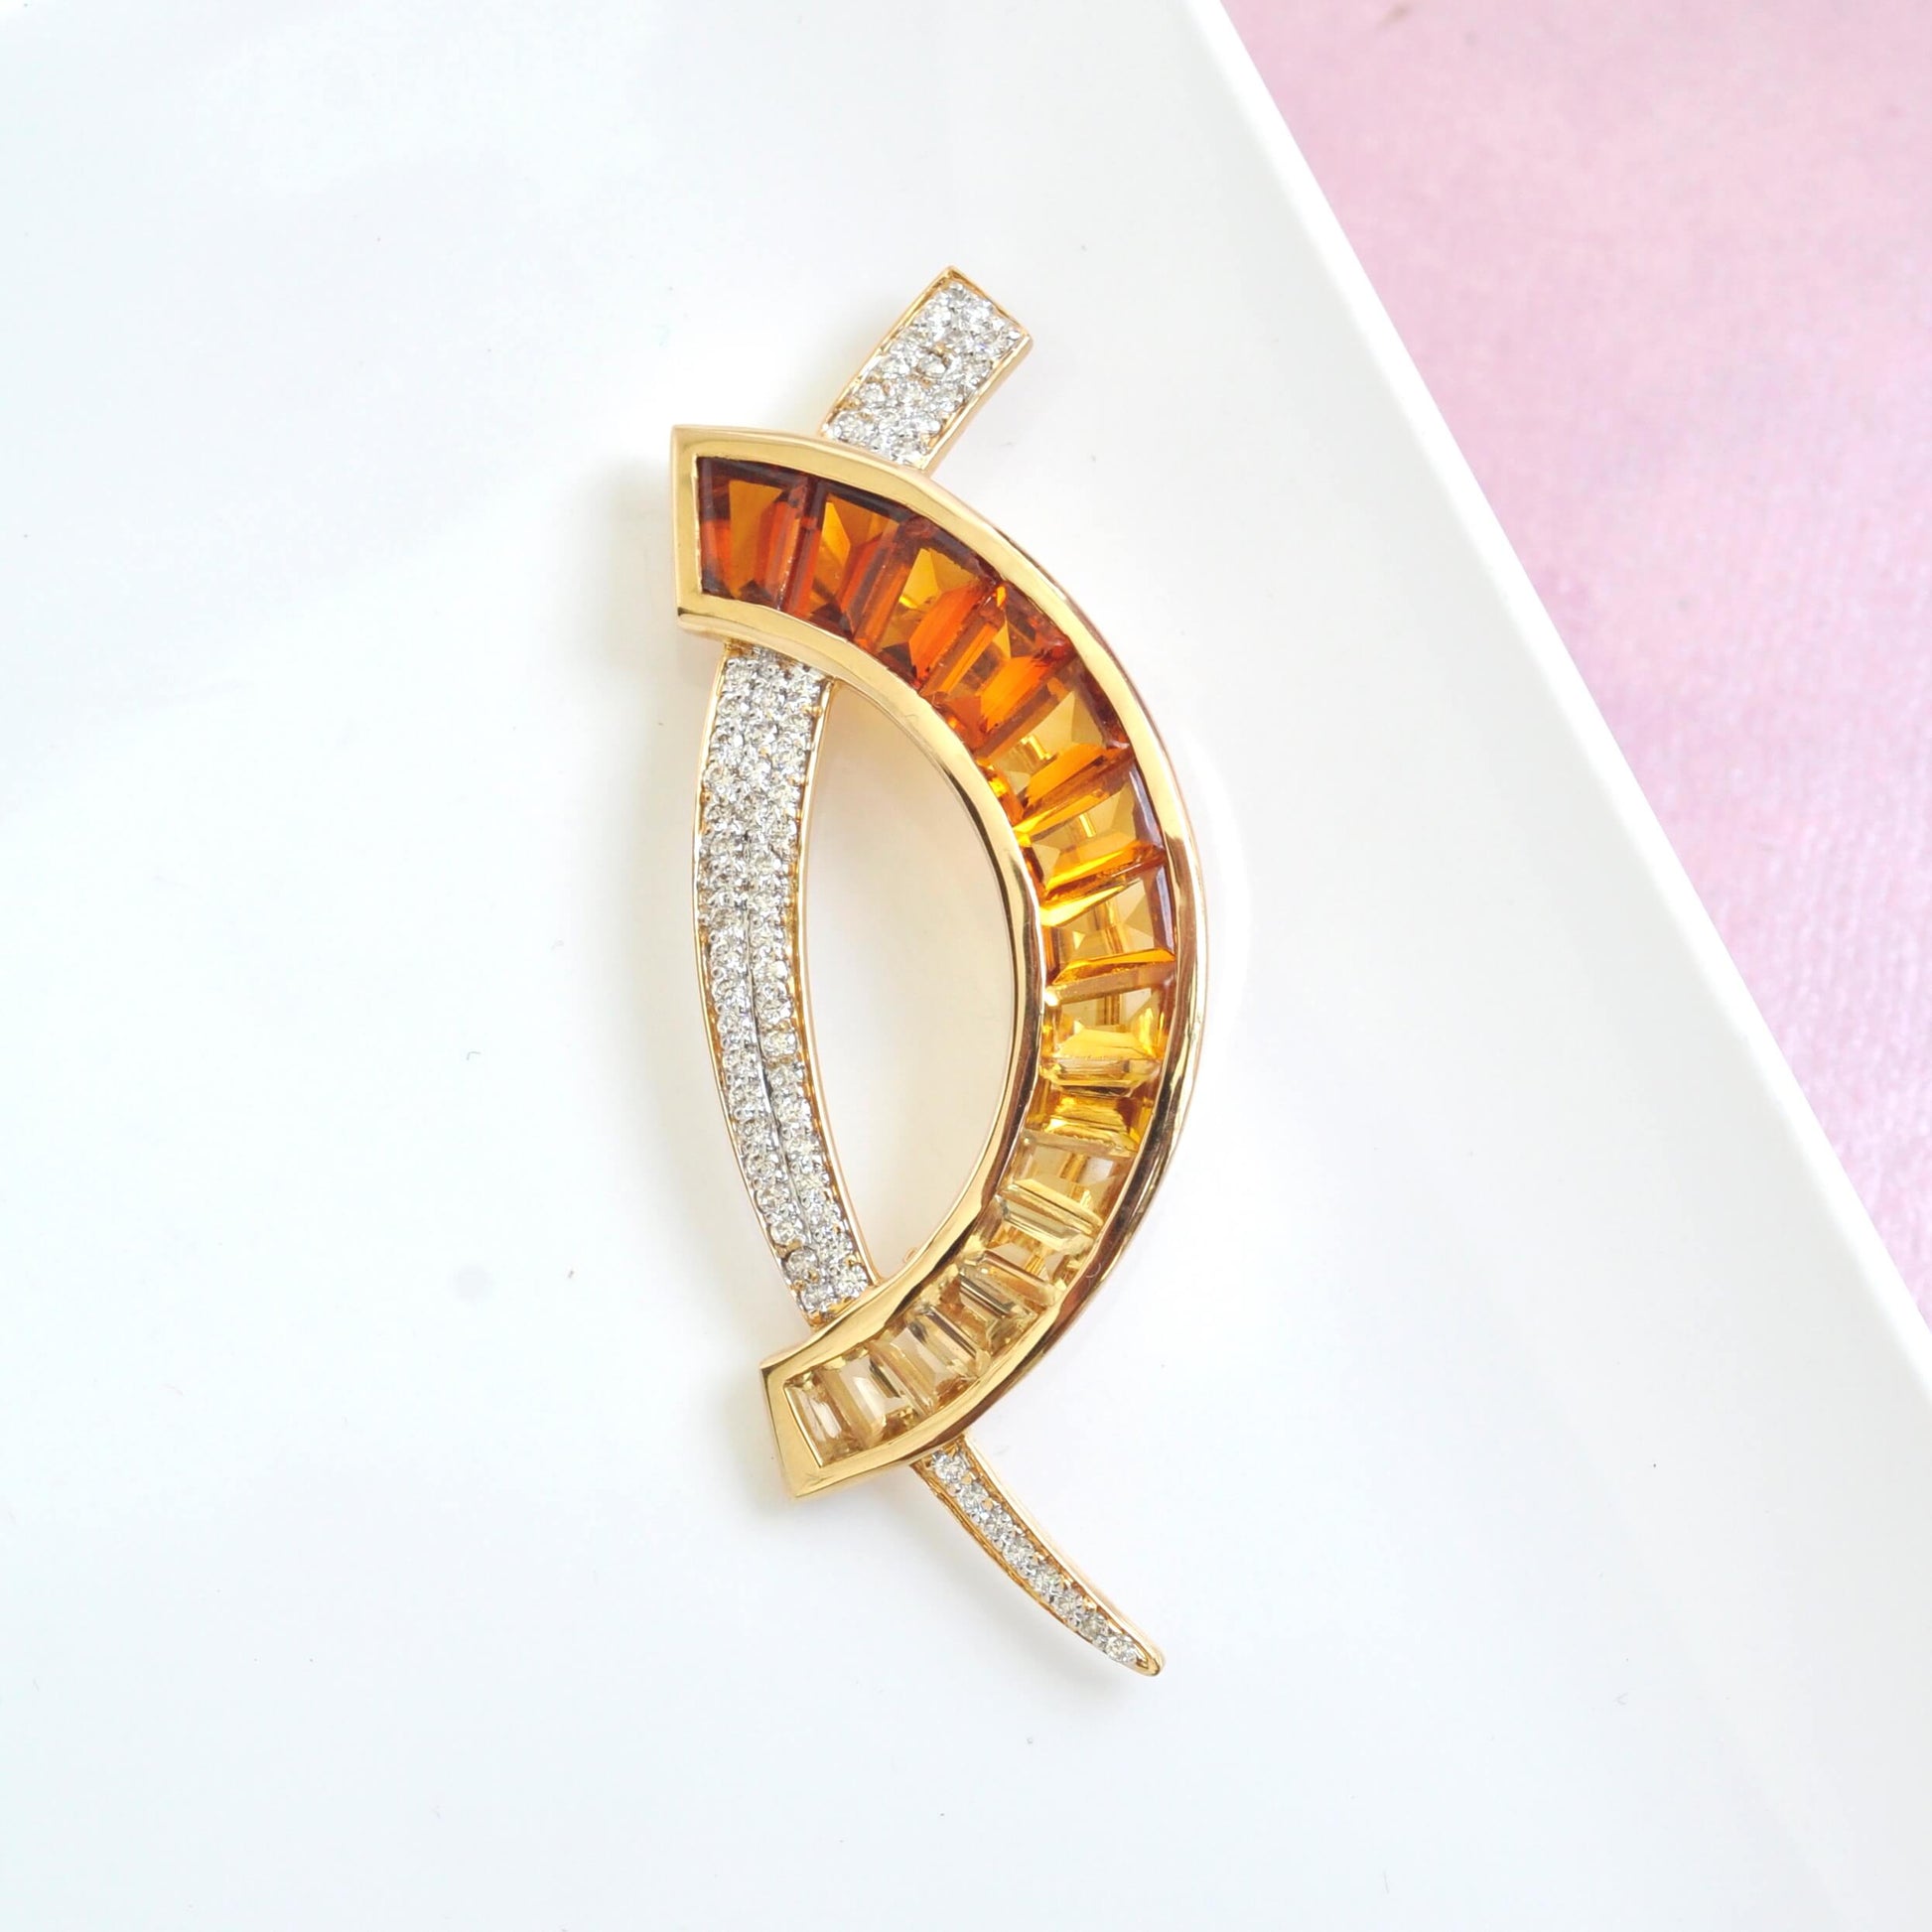 18K Gold "D" Channel-Set Citrine Diamond Pendant Brooch - Vaibhav Dhadda Jewelry